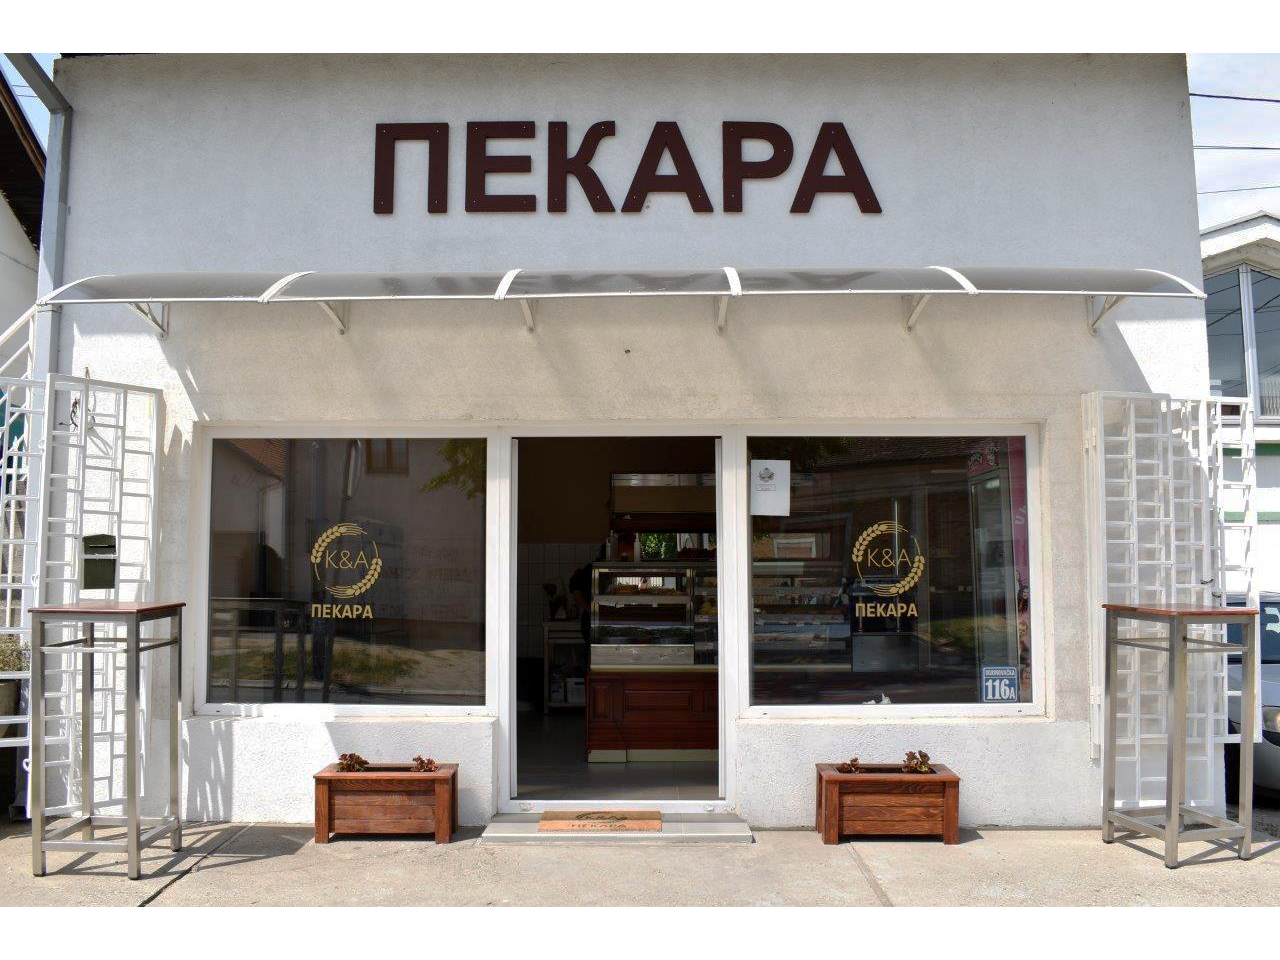 KETERING I PEKARA K&A Pekare Beograd - Slika 1